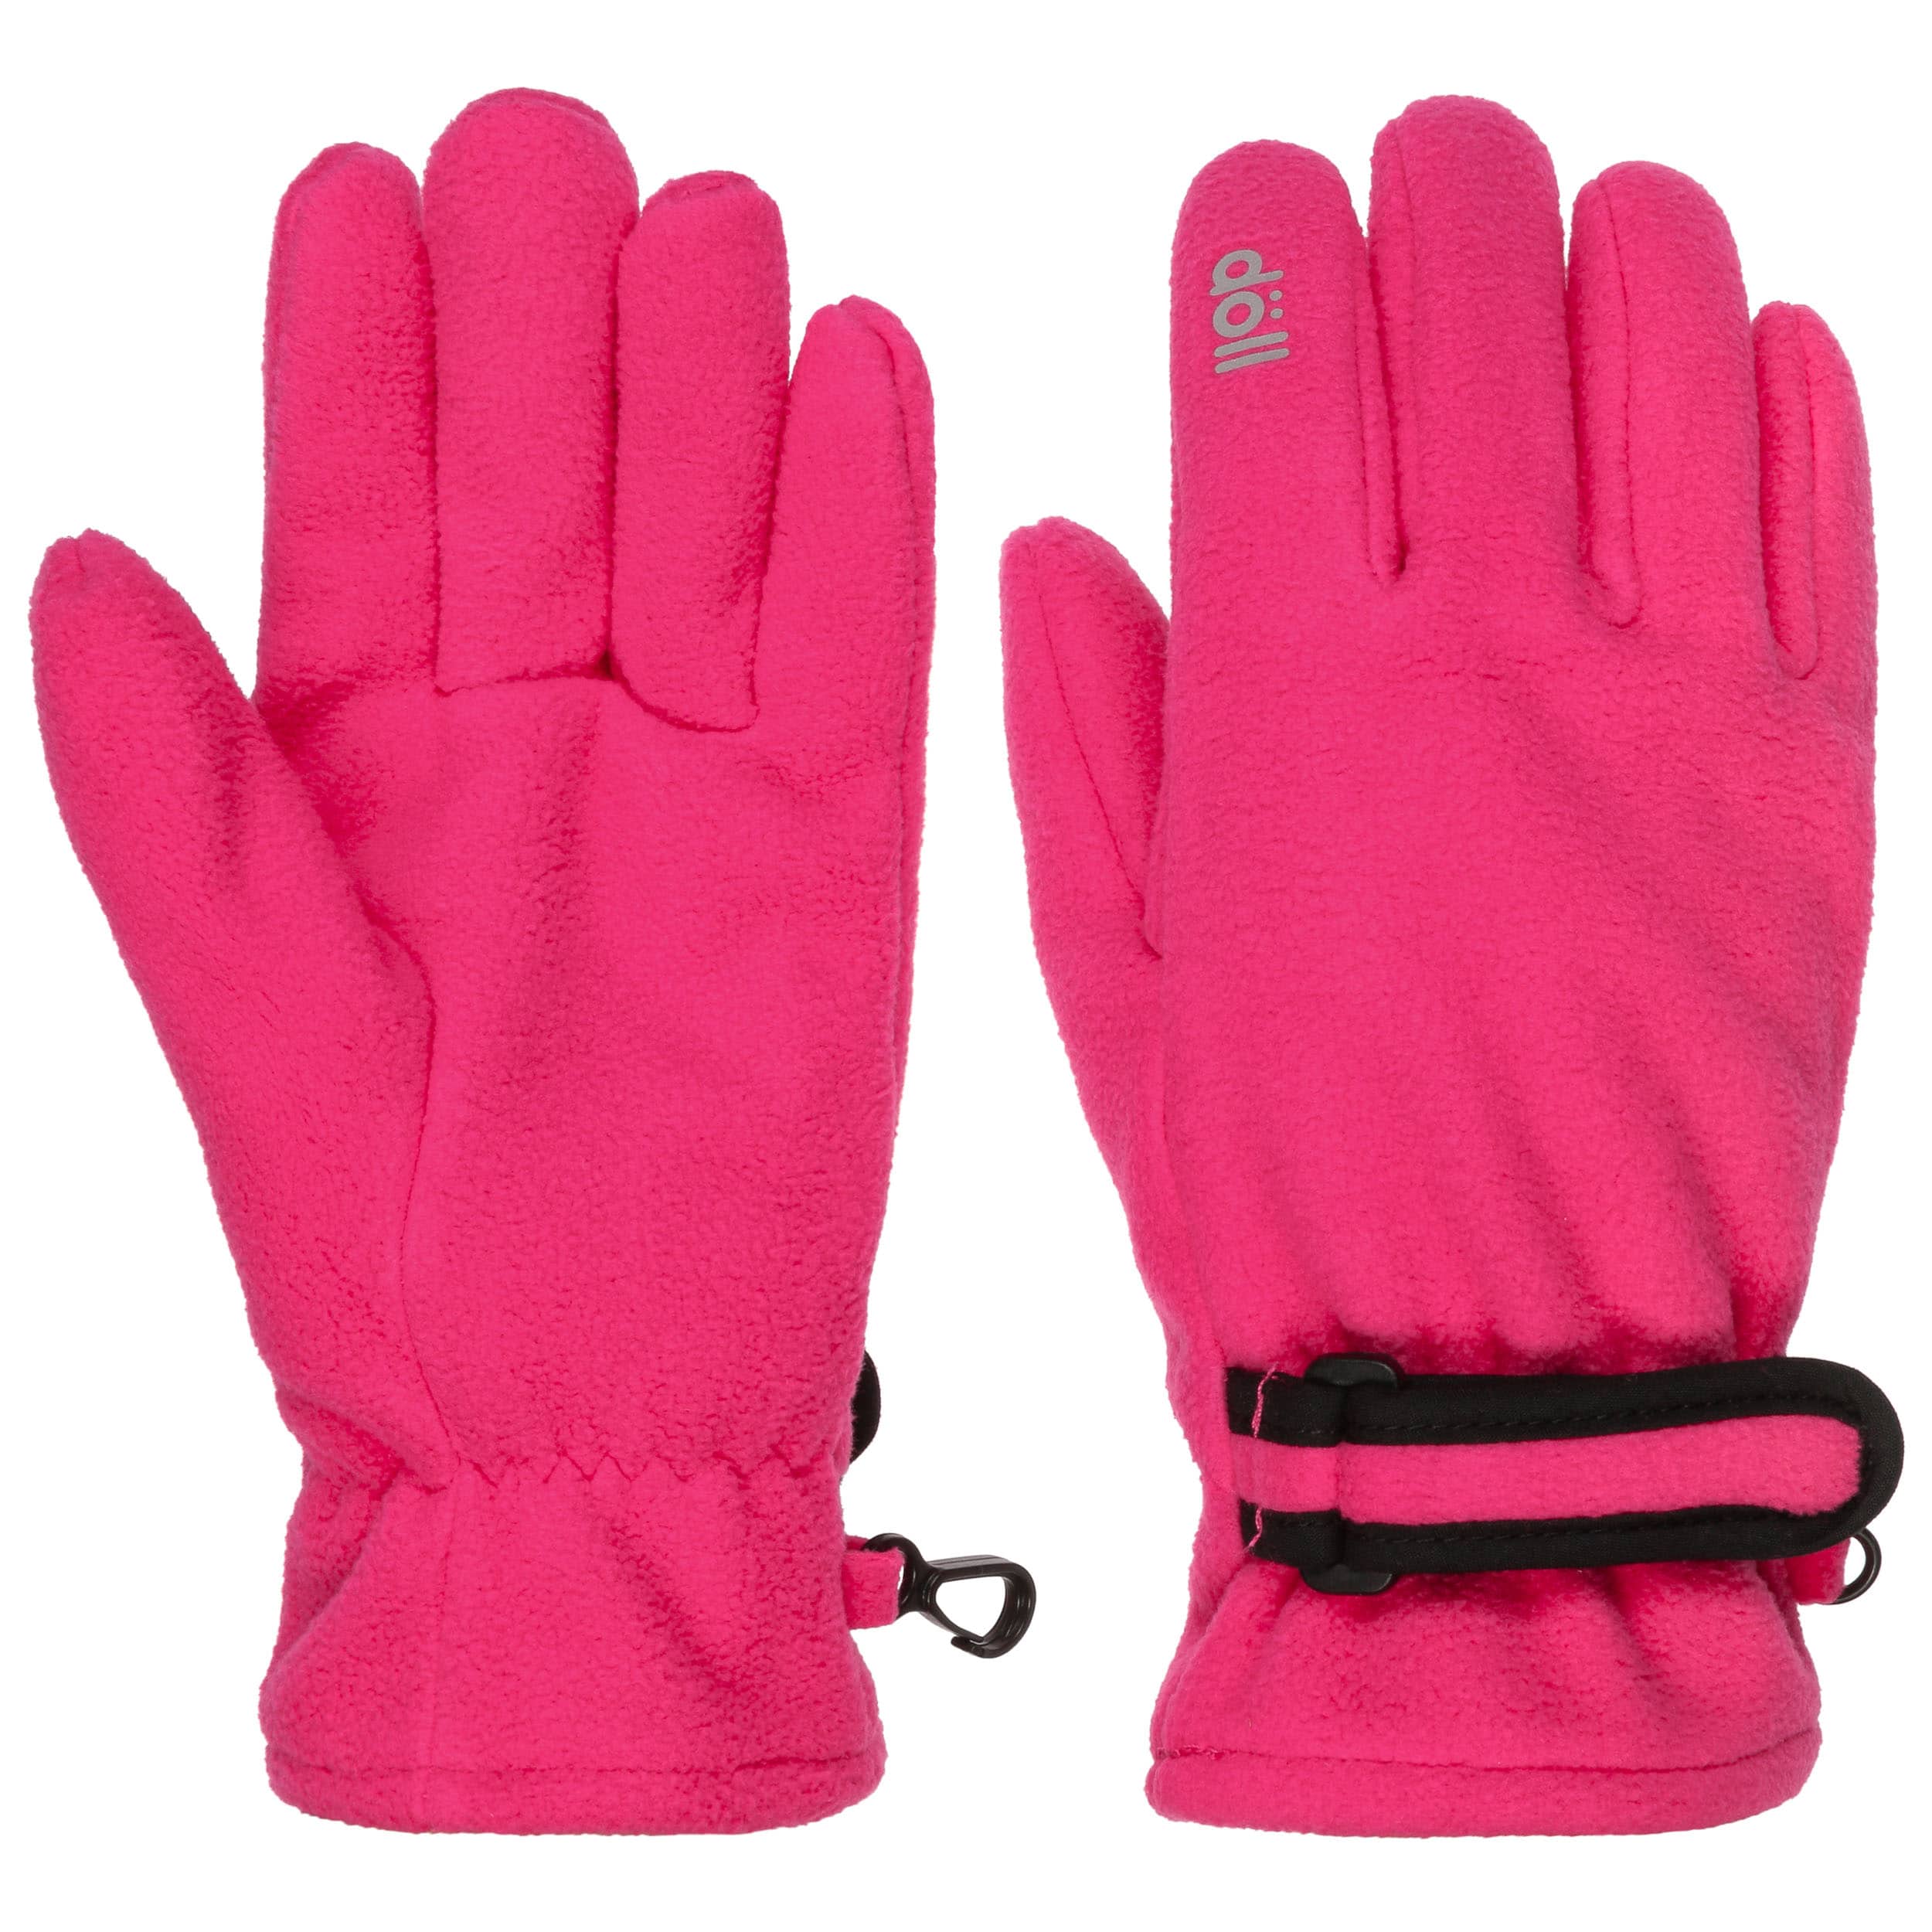 Kids Waterproof Gloves Clearance, 60% OFF | espirituviajero.com